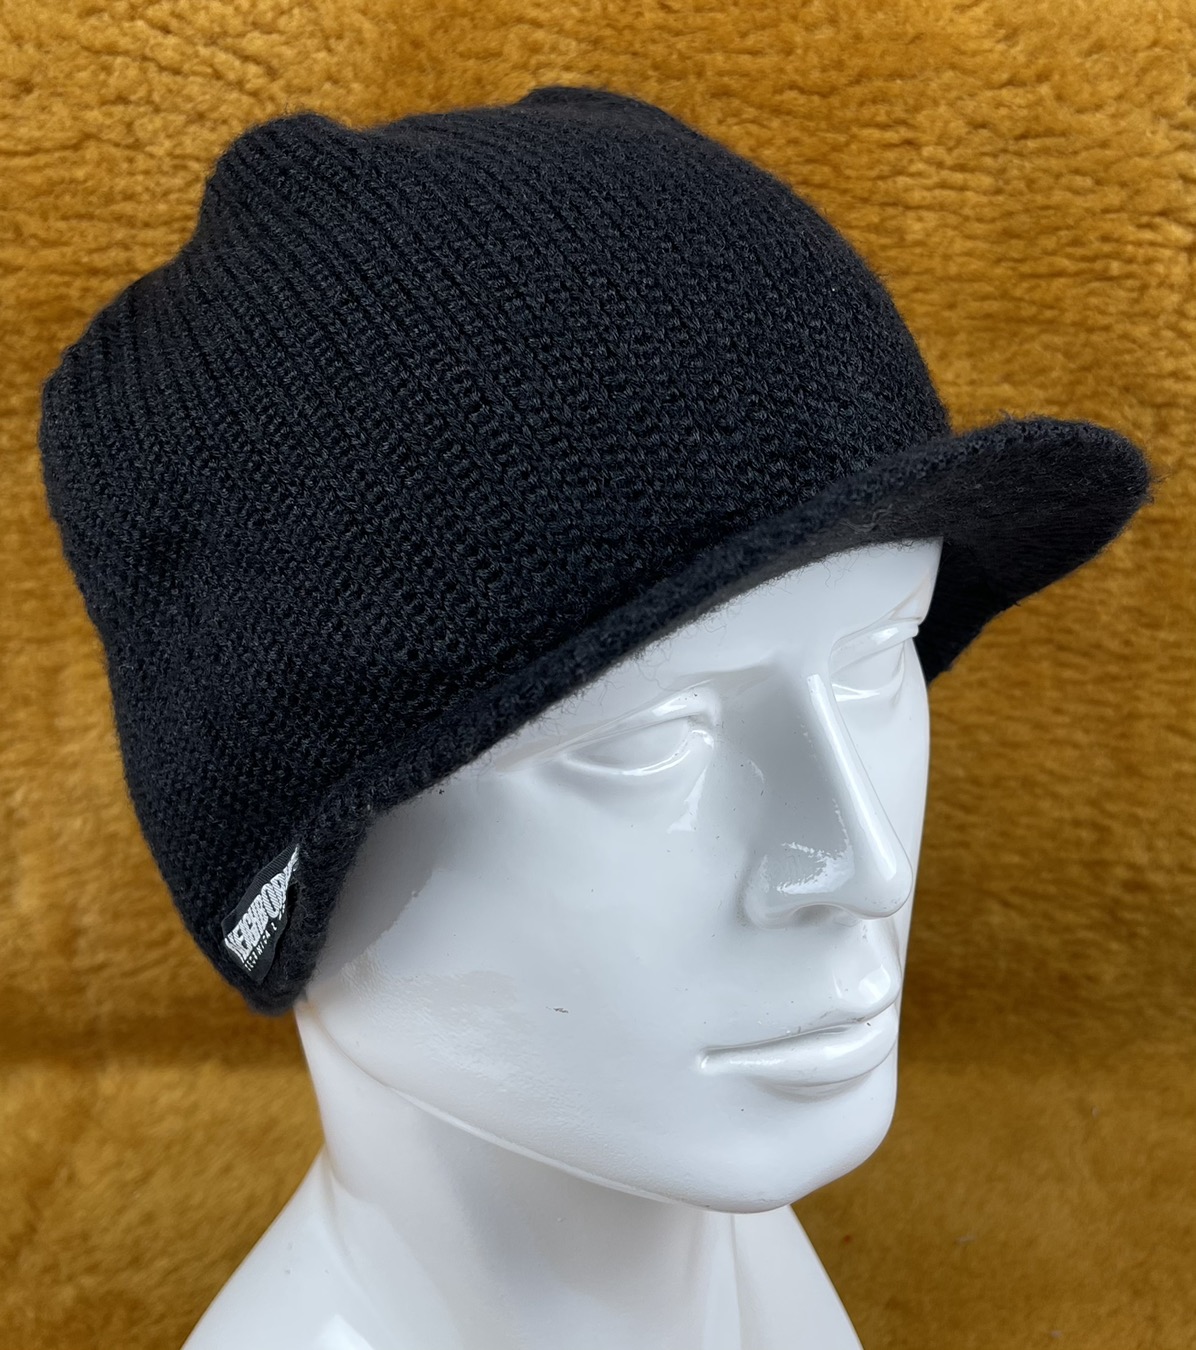 neighbourhood hat beanie hat snow cap wool hat - 1